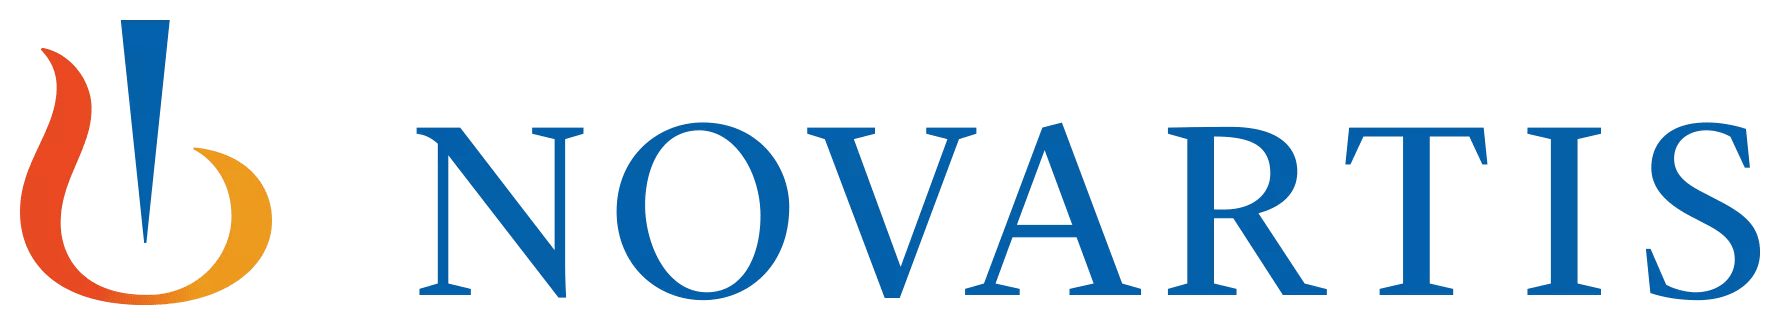 Novartis logo (1)